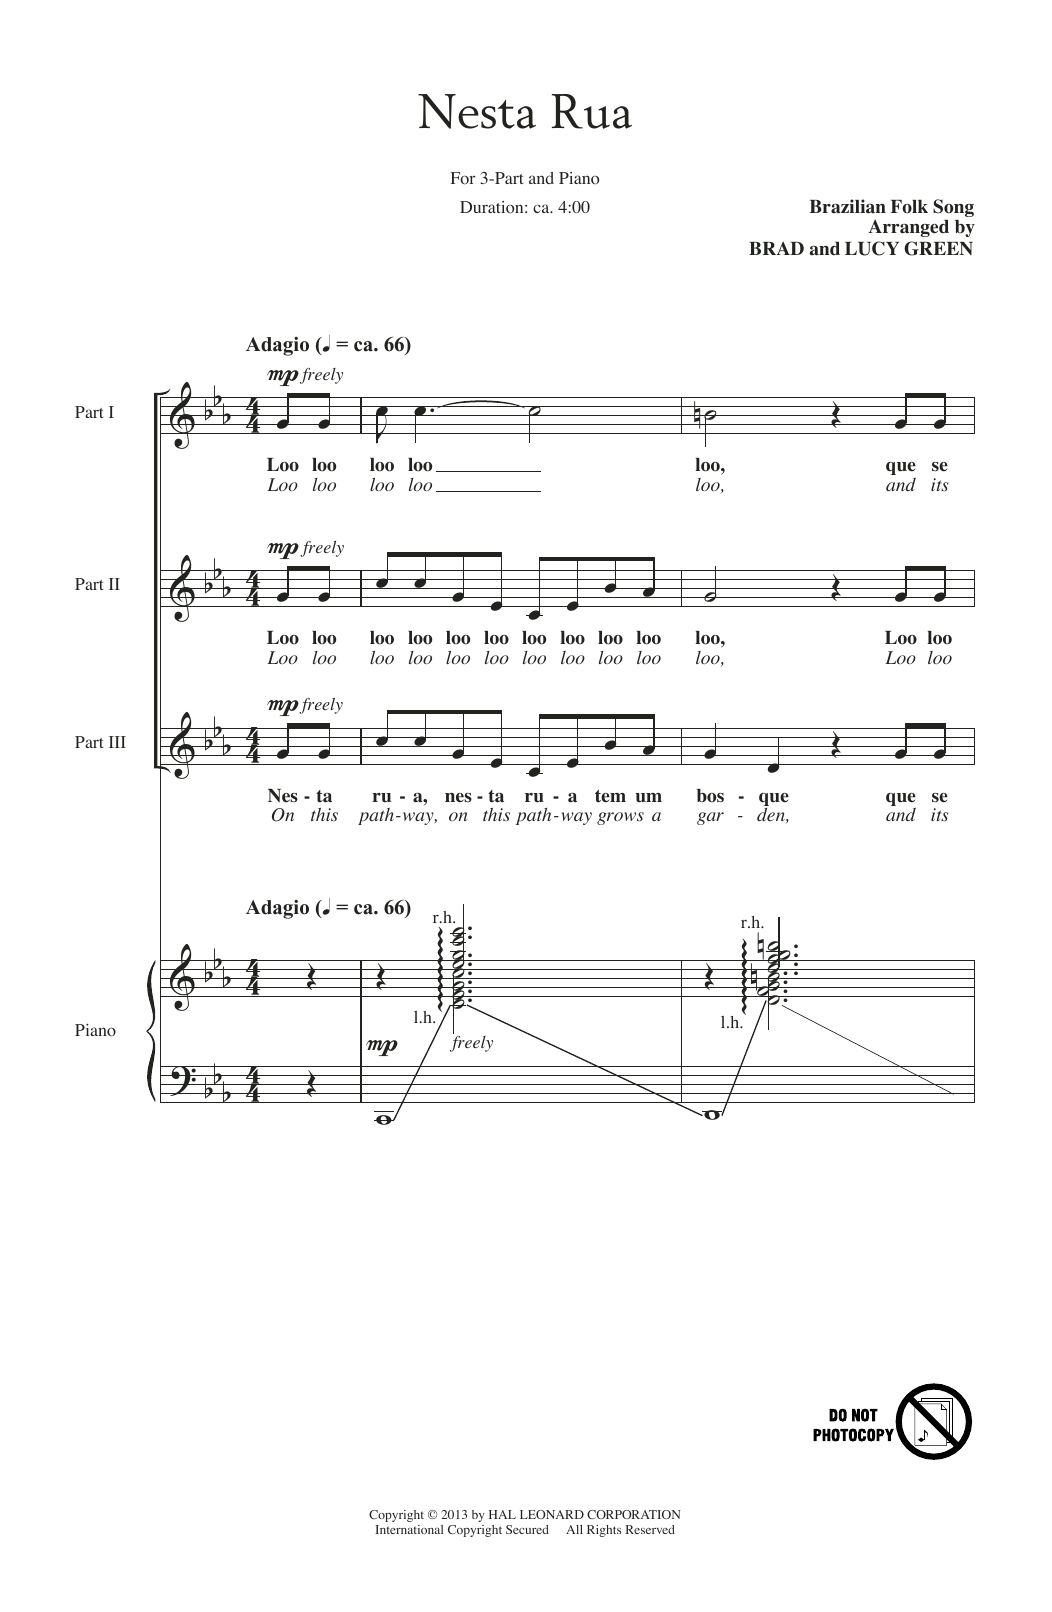 Download Brazilian Folk Song Nesta Rua (arr. Brad Green) Sheet Music and learn how to play 3-Part Treble PDF digital score in minutes